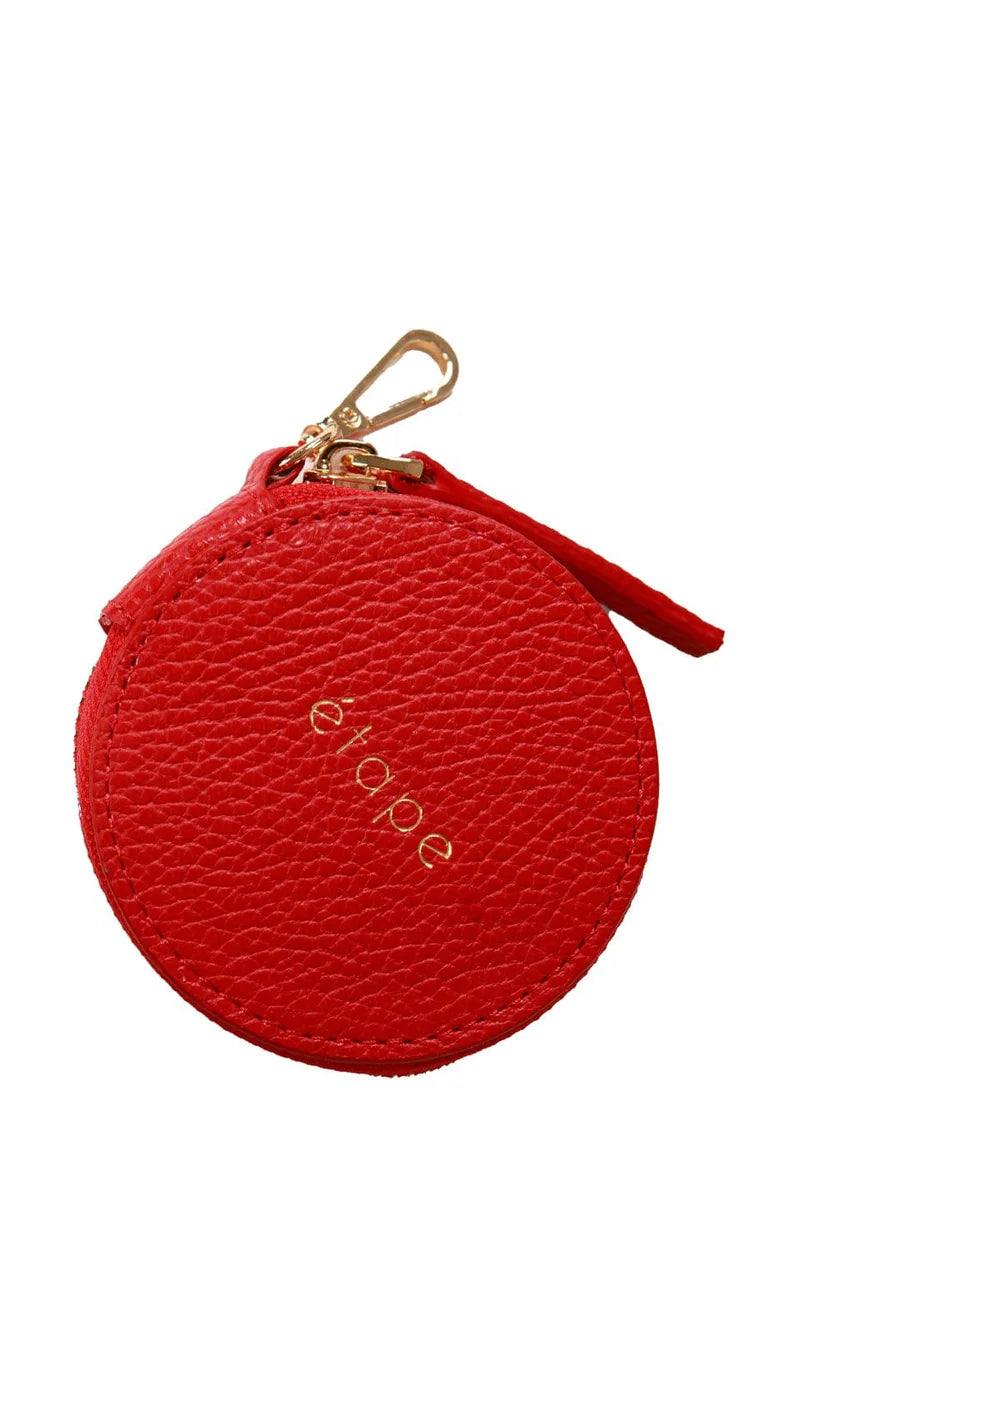 Dámská peněženka Etape, scarlet, (Etape), toy wallet scarlet